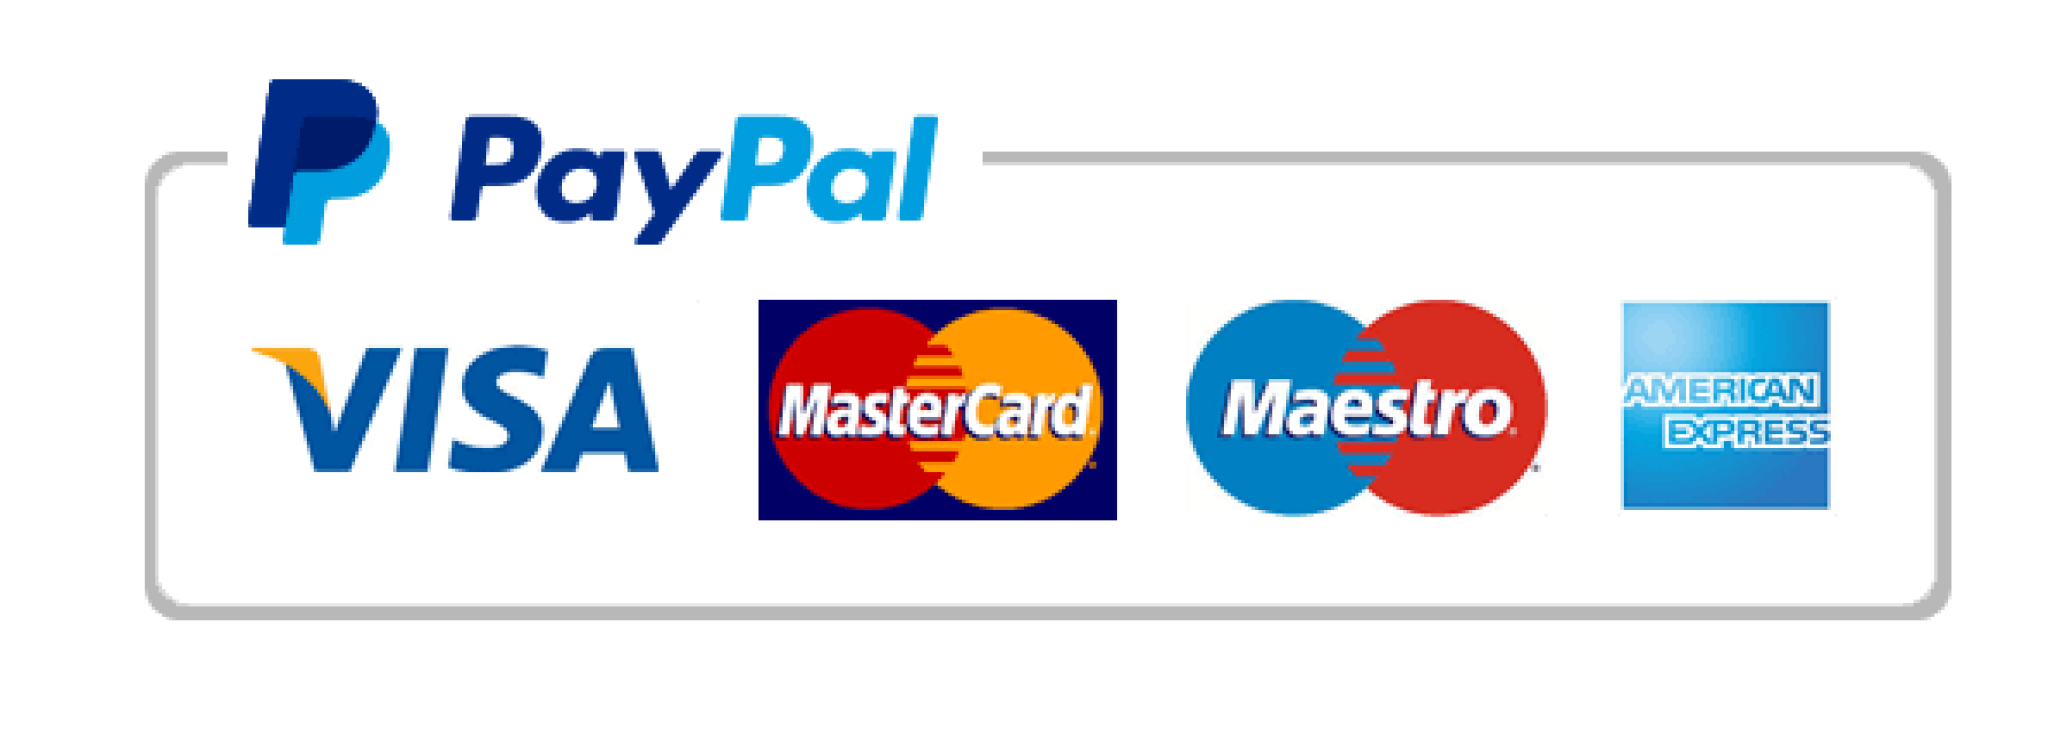 PAYPAL логотип. PAYPAL иконка. Платежная система PAYPAL. Карта visa MASTERCARD Maestro.